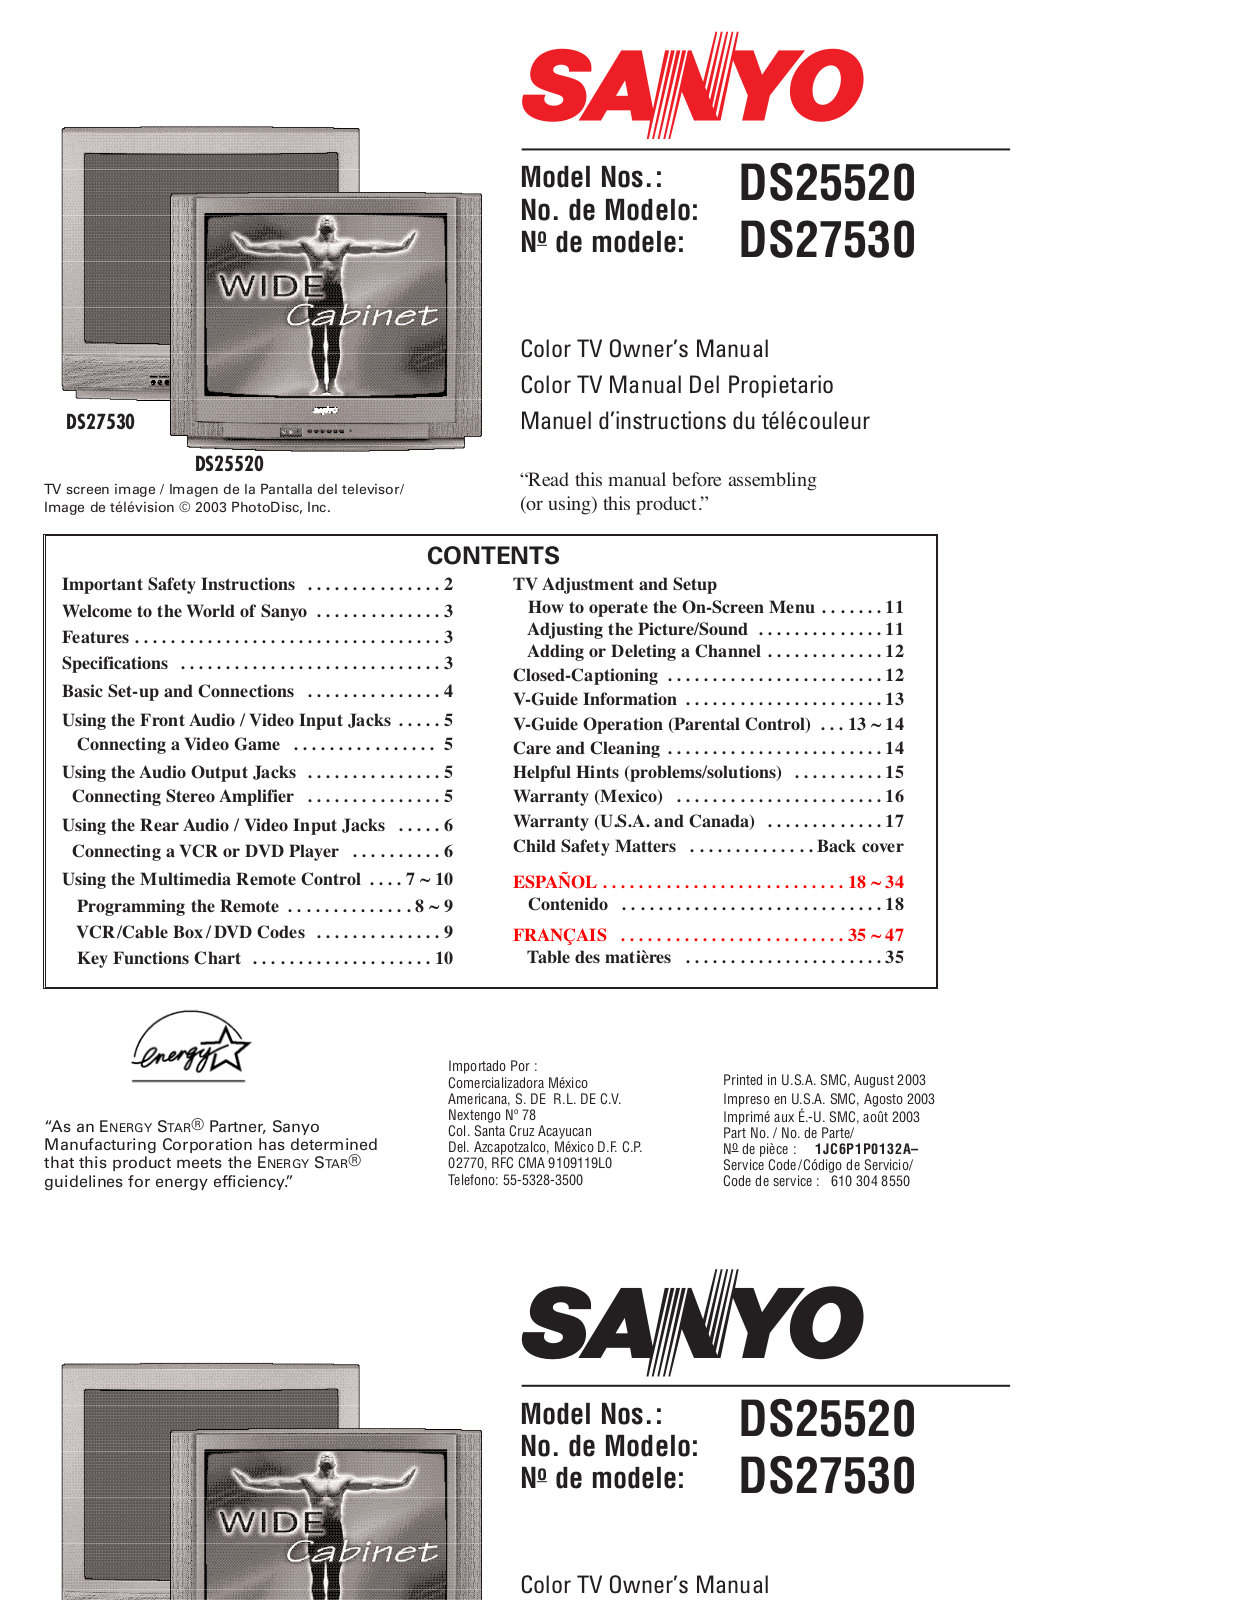 SANYO DS27530 User Manual